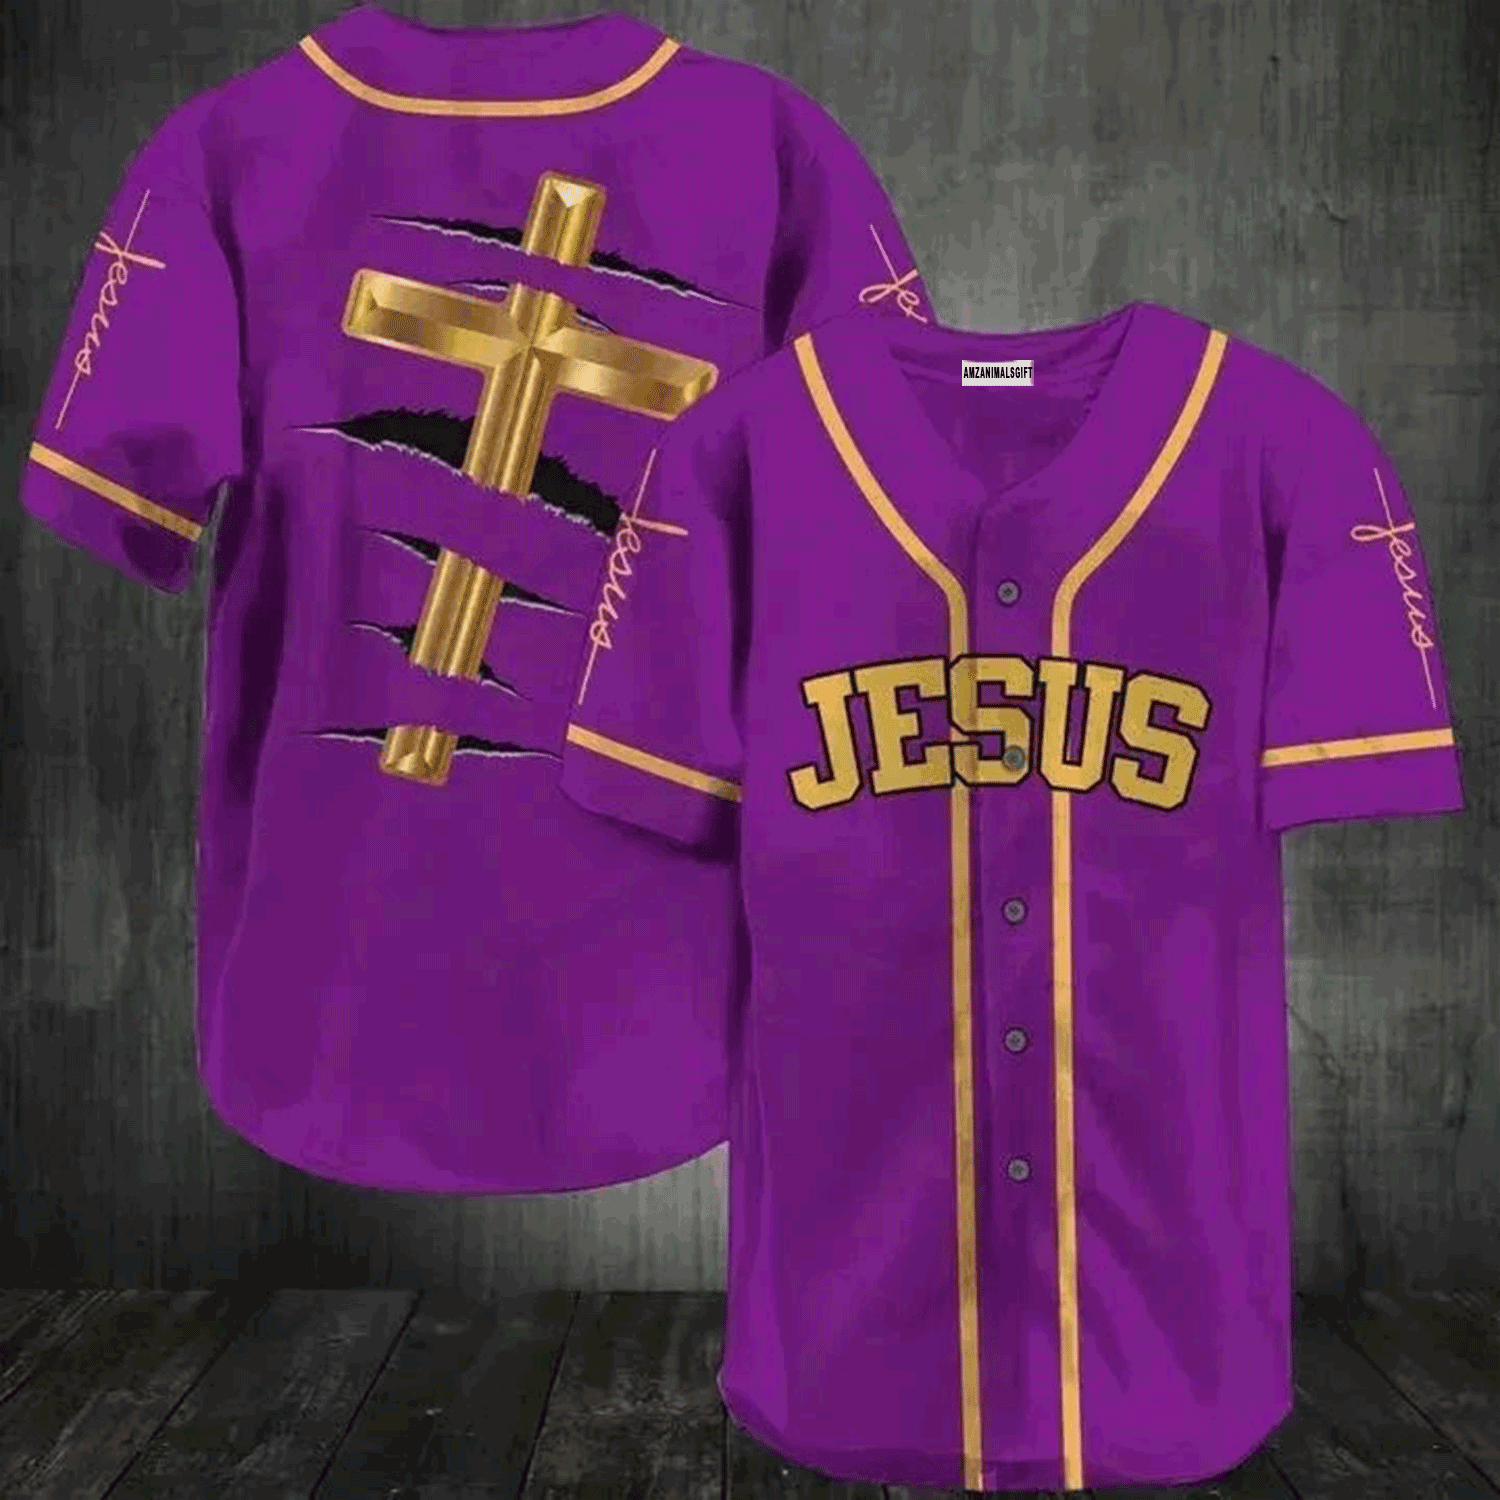 Jesus Baseball Jersey Shirt - The Cross Purple Baseball Jersey Shirt For Men & Women, Perfect Gift For Christian